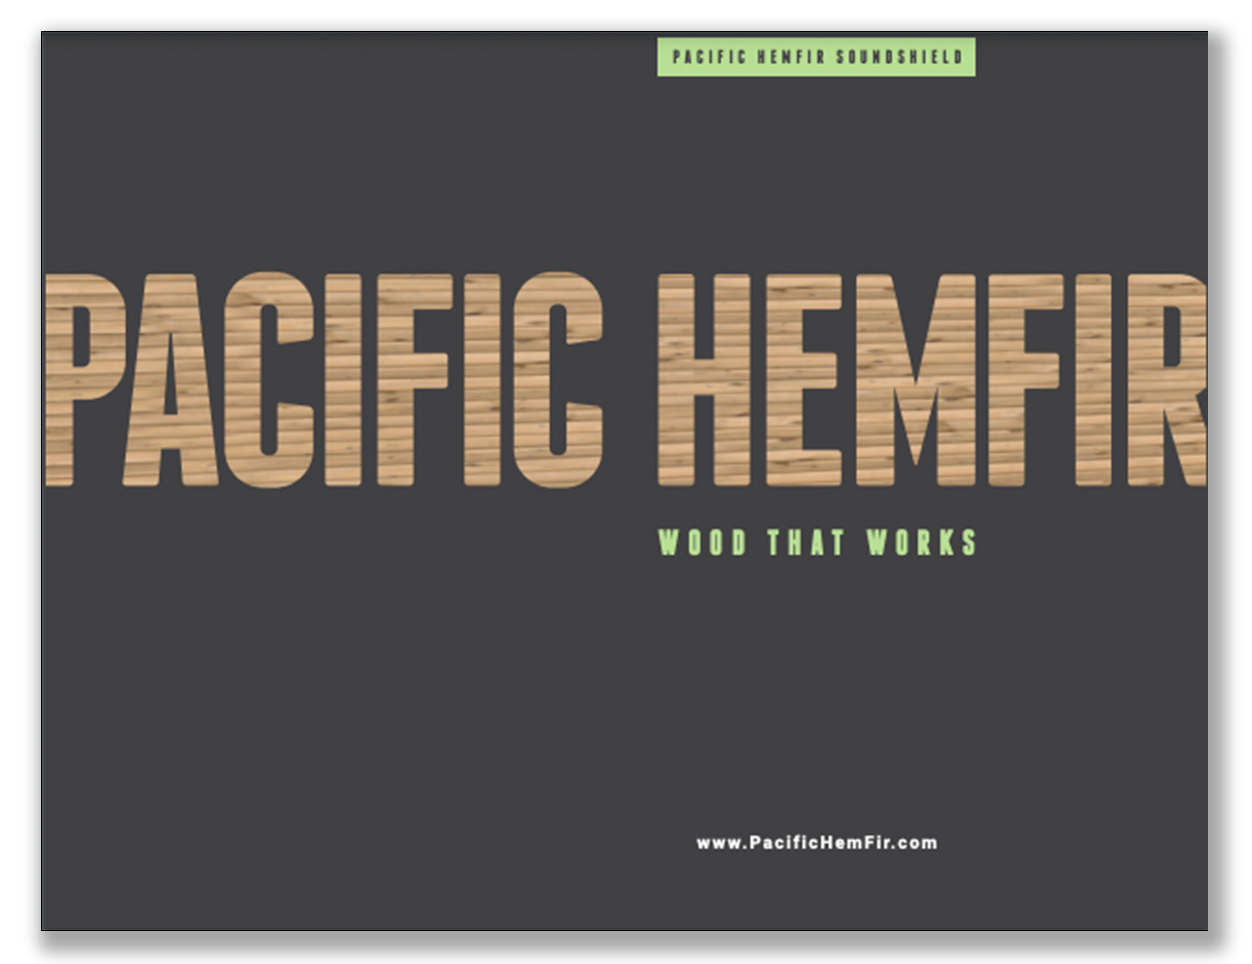 PacificHemFir soundshield Brochure cover